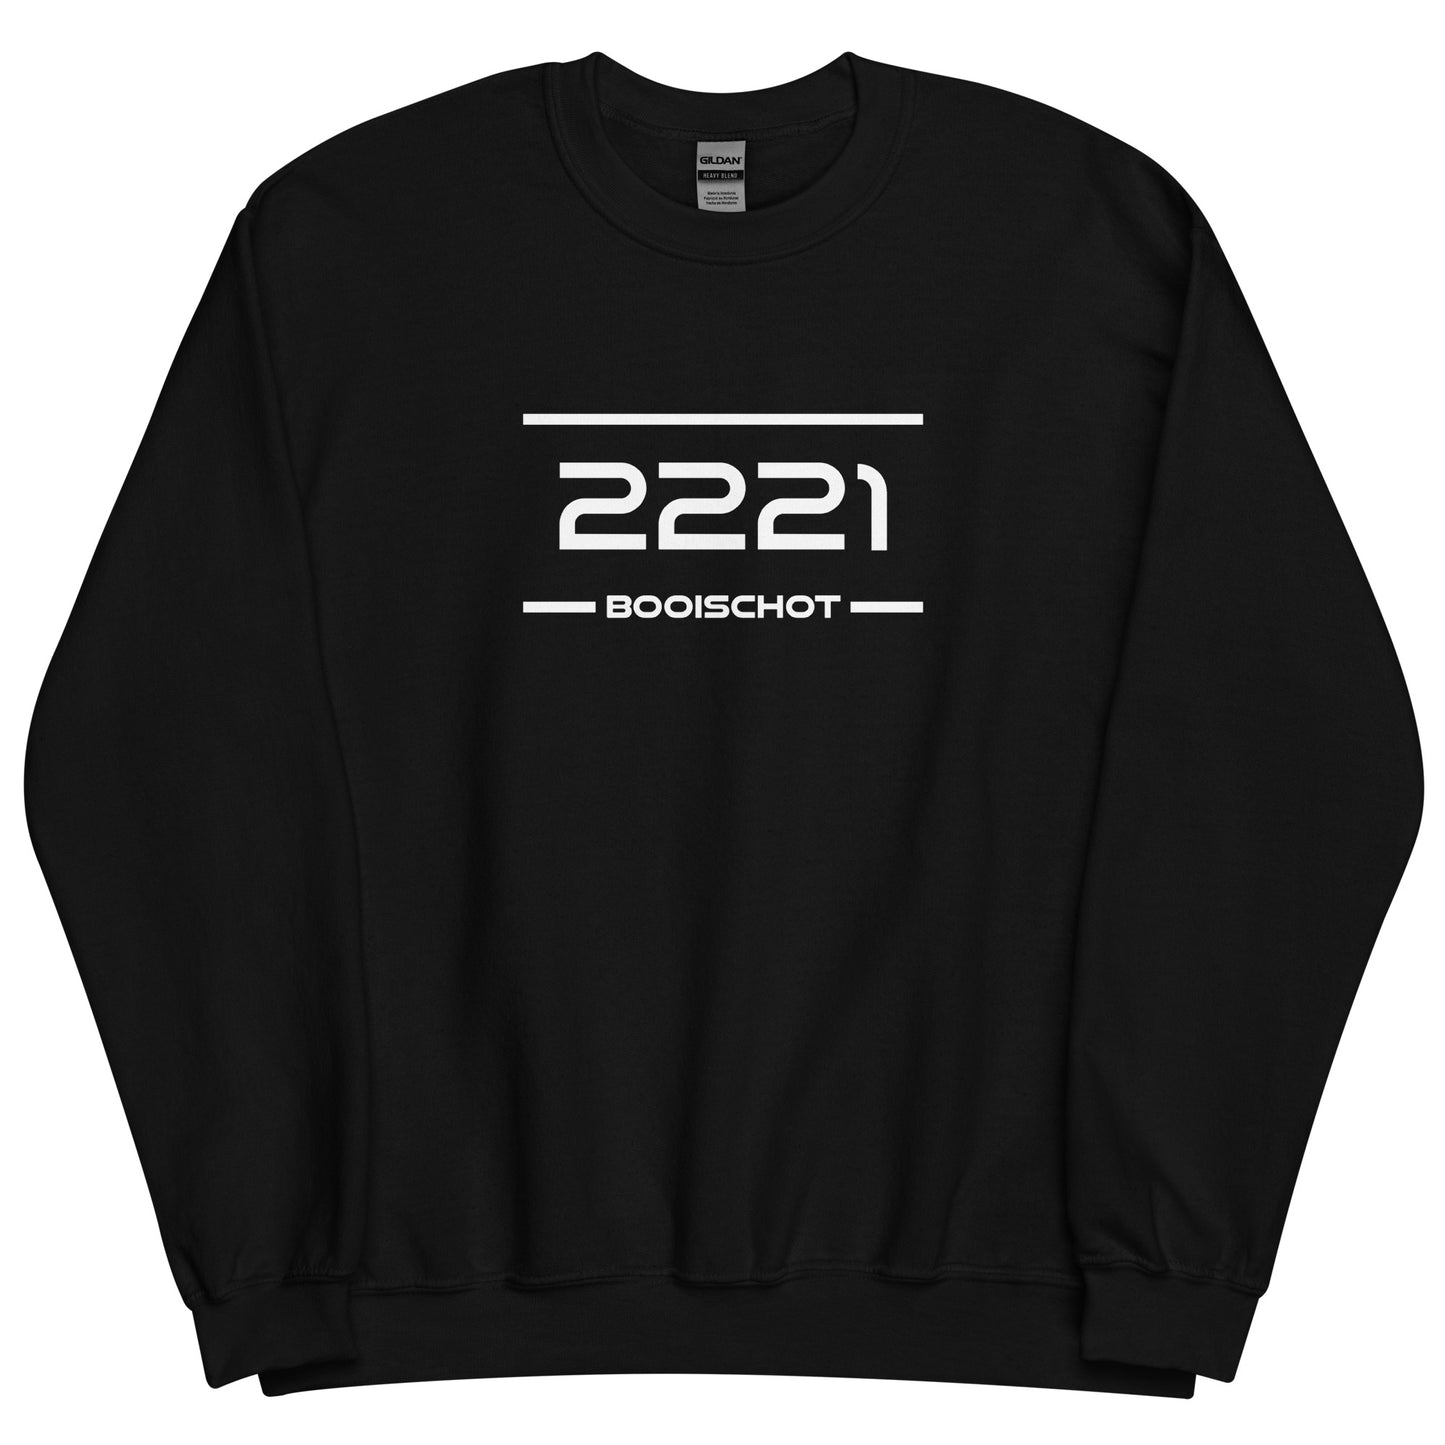 Sweater - 2221 - Booischot (M/V)